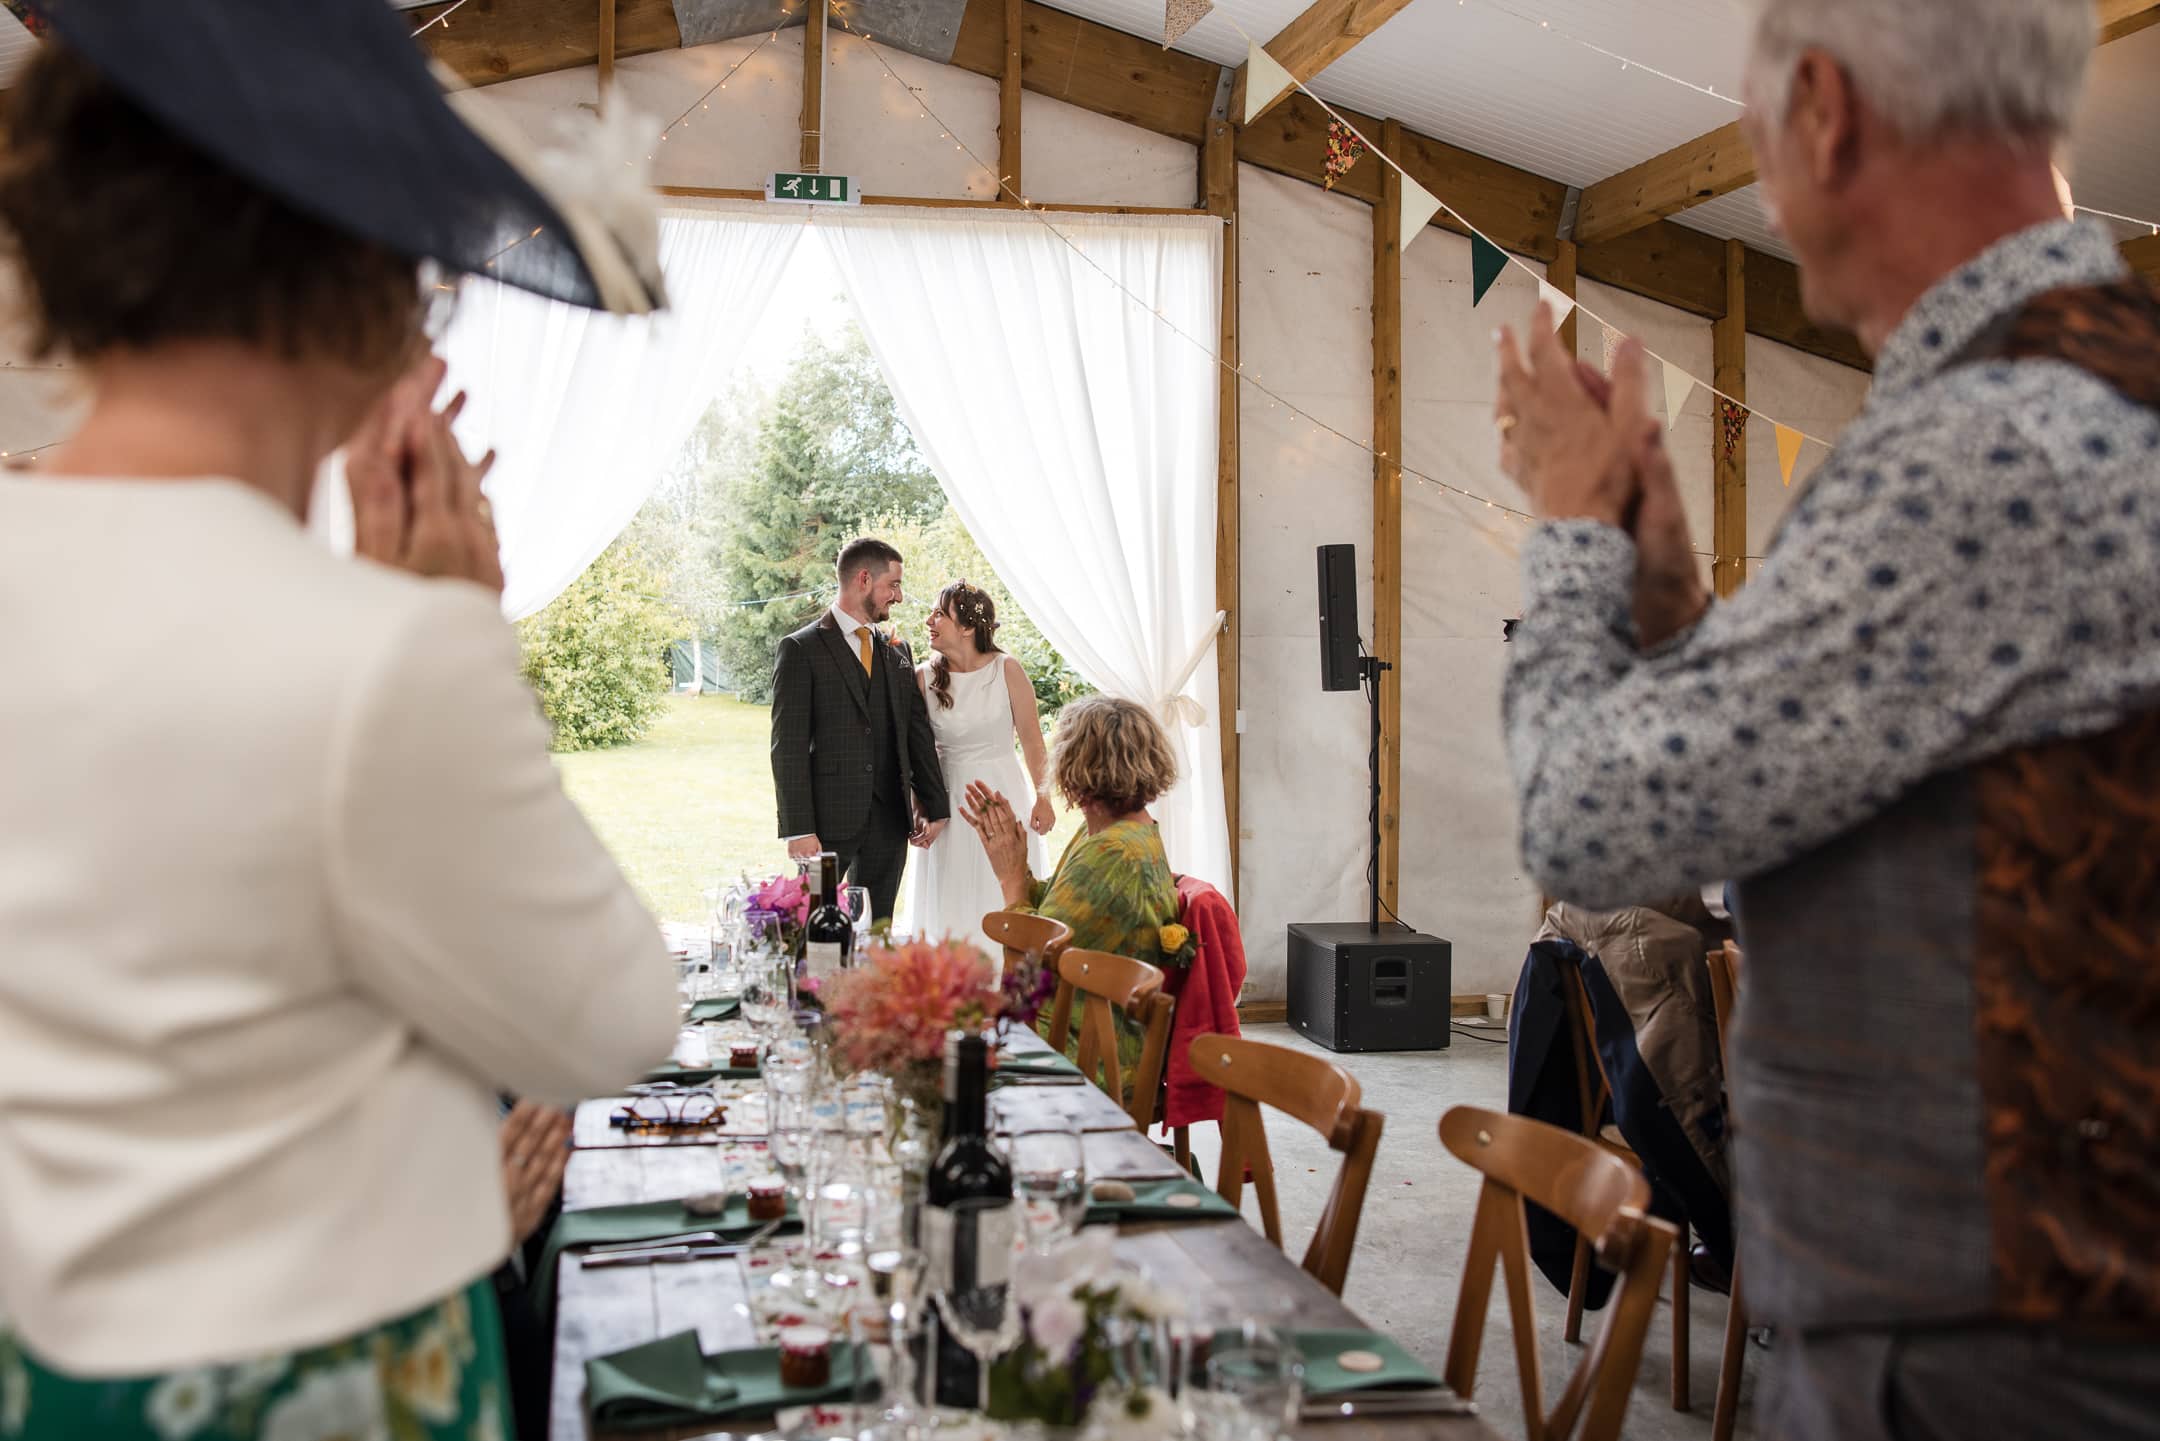 Couple enter the barn for wedding breakfast at the Acorn Barn Wedding